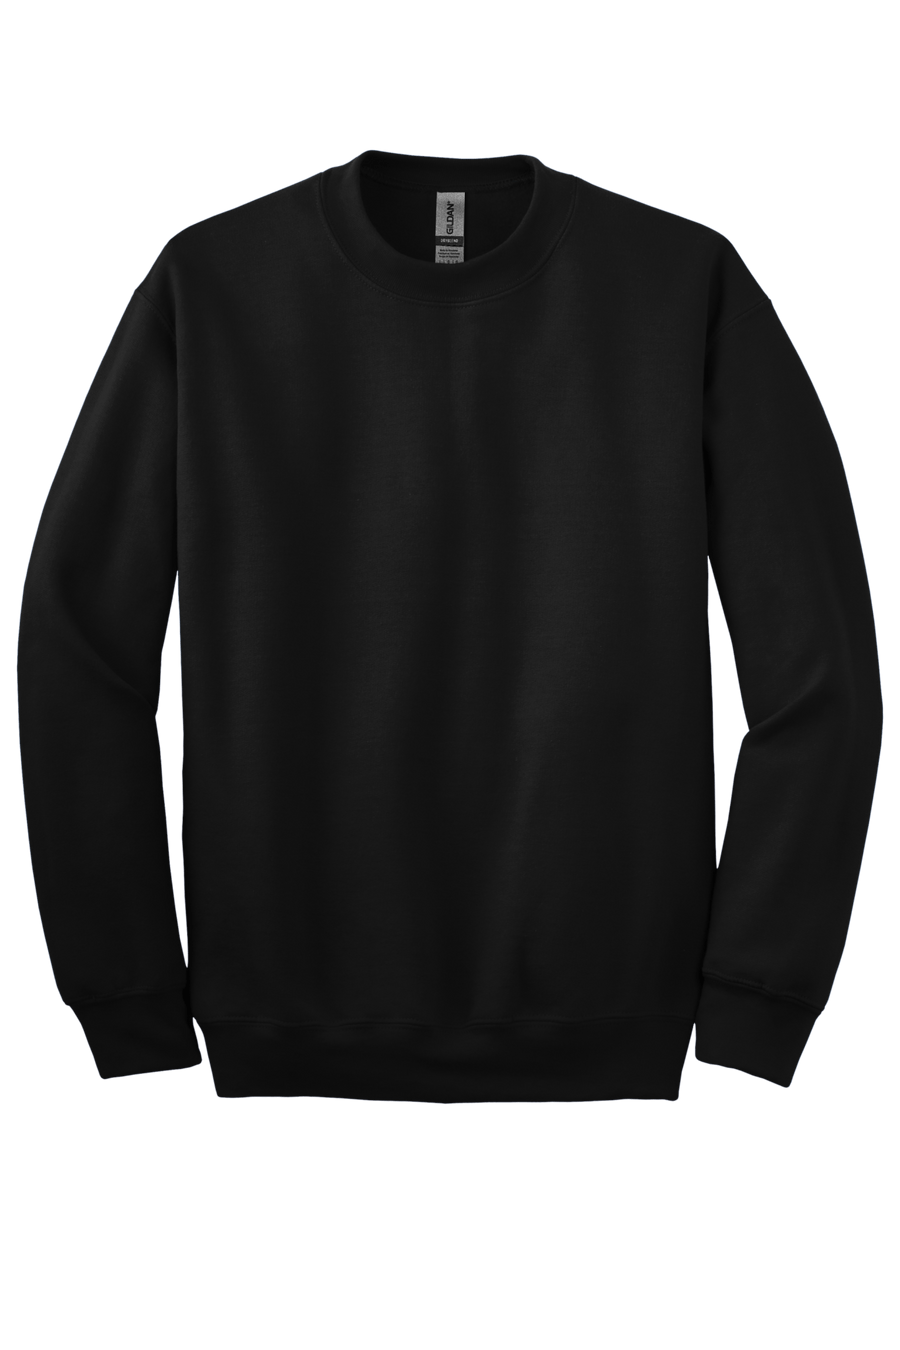 Gildan® - DryBlend® Crewneck Sweatshirt - Infinite Potential Enterprise